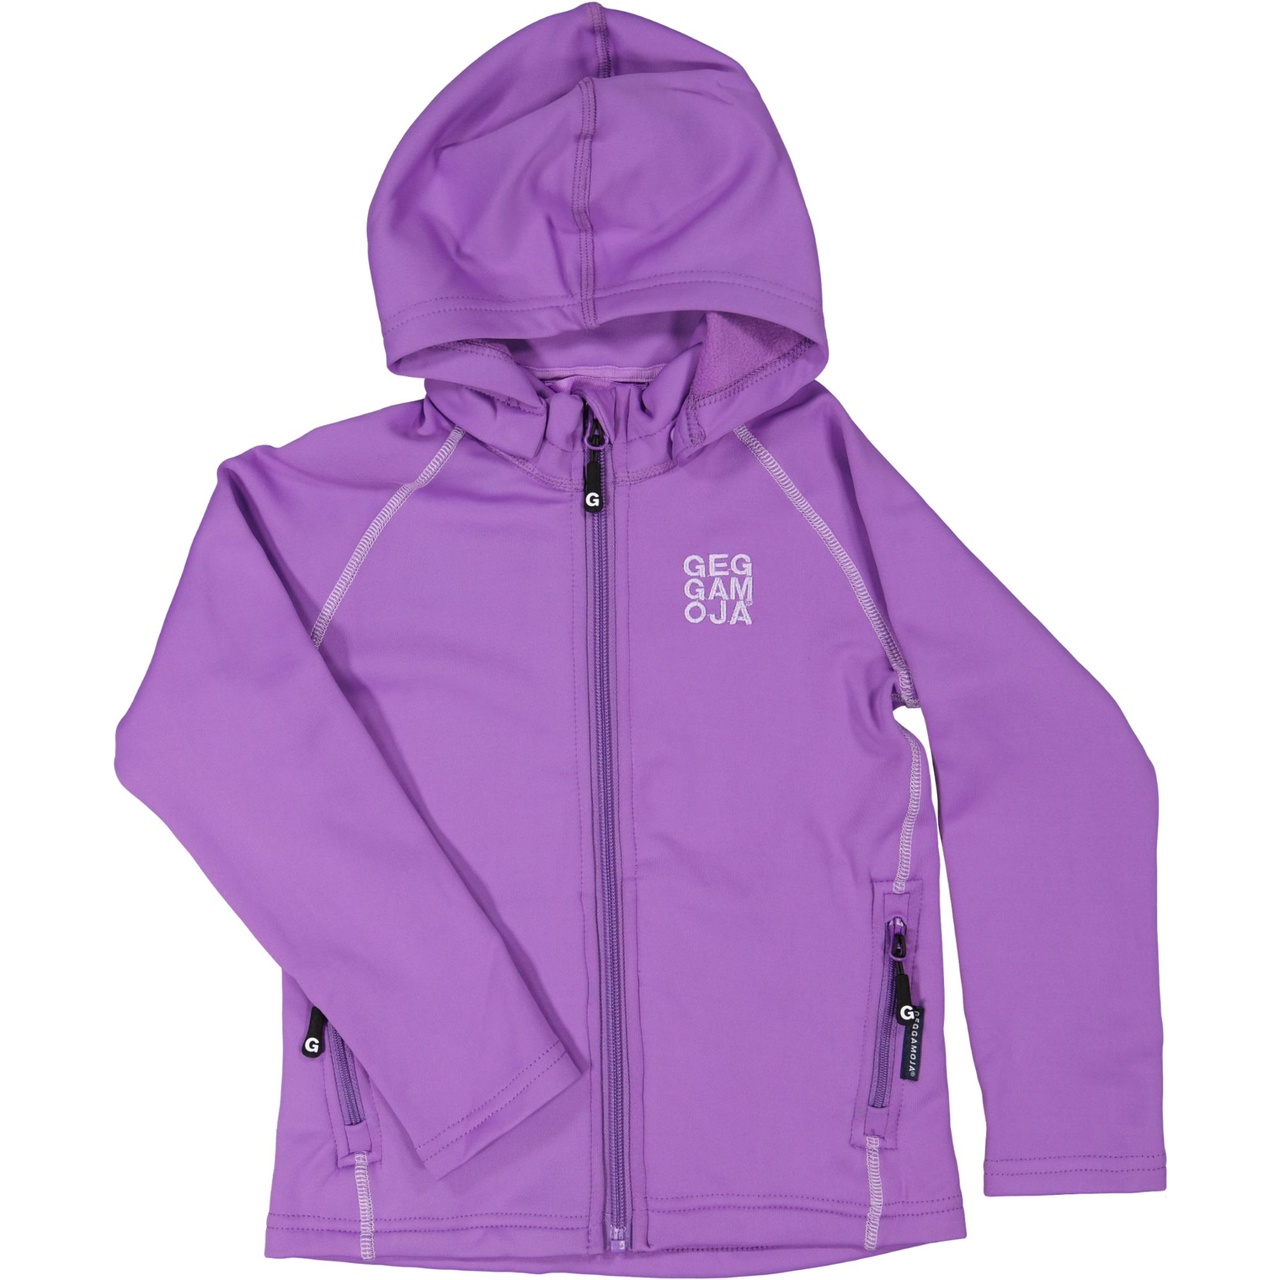 Stretch hoodie Teen Violett 158/164